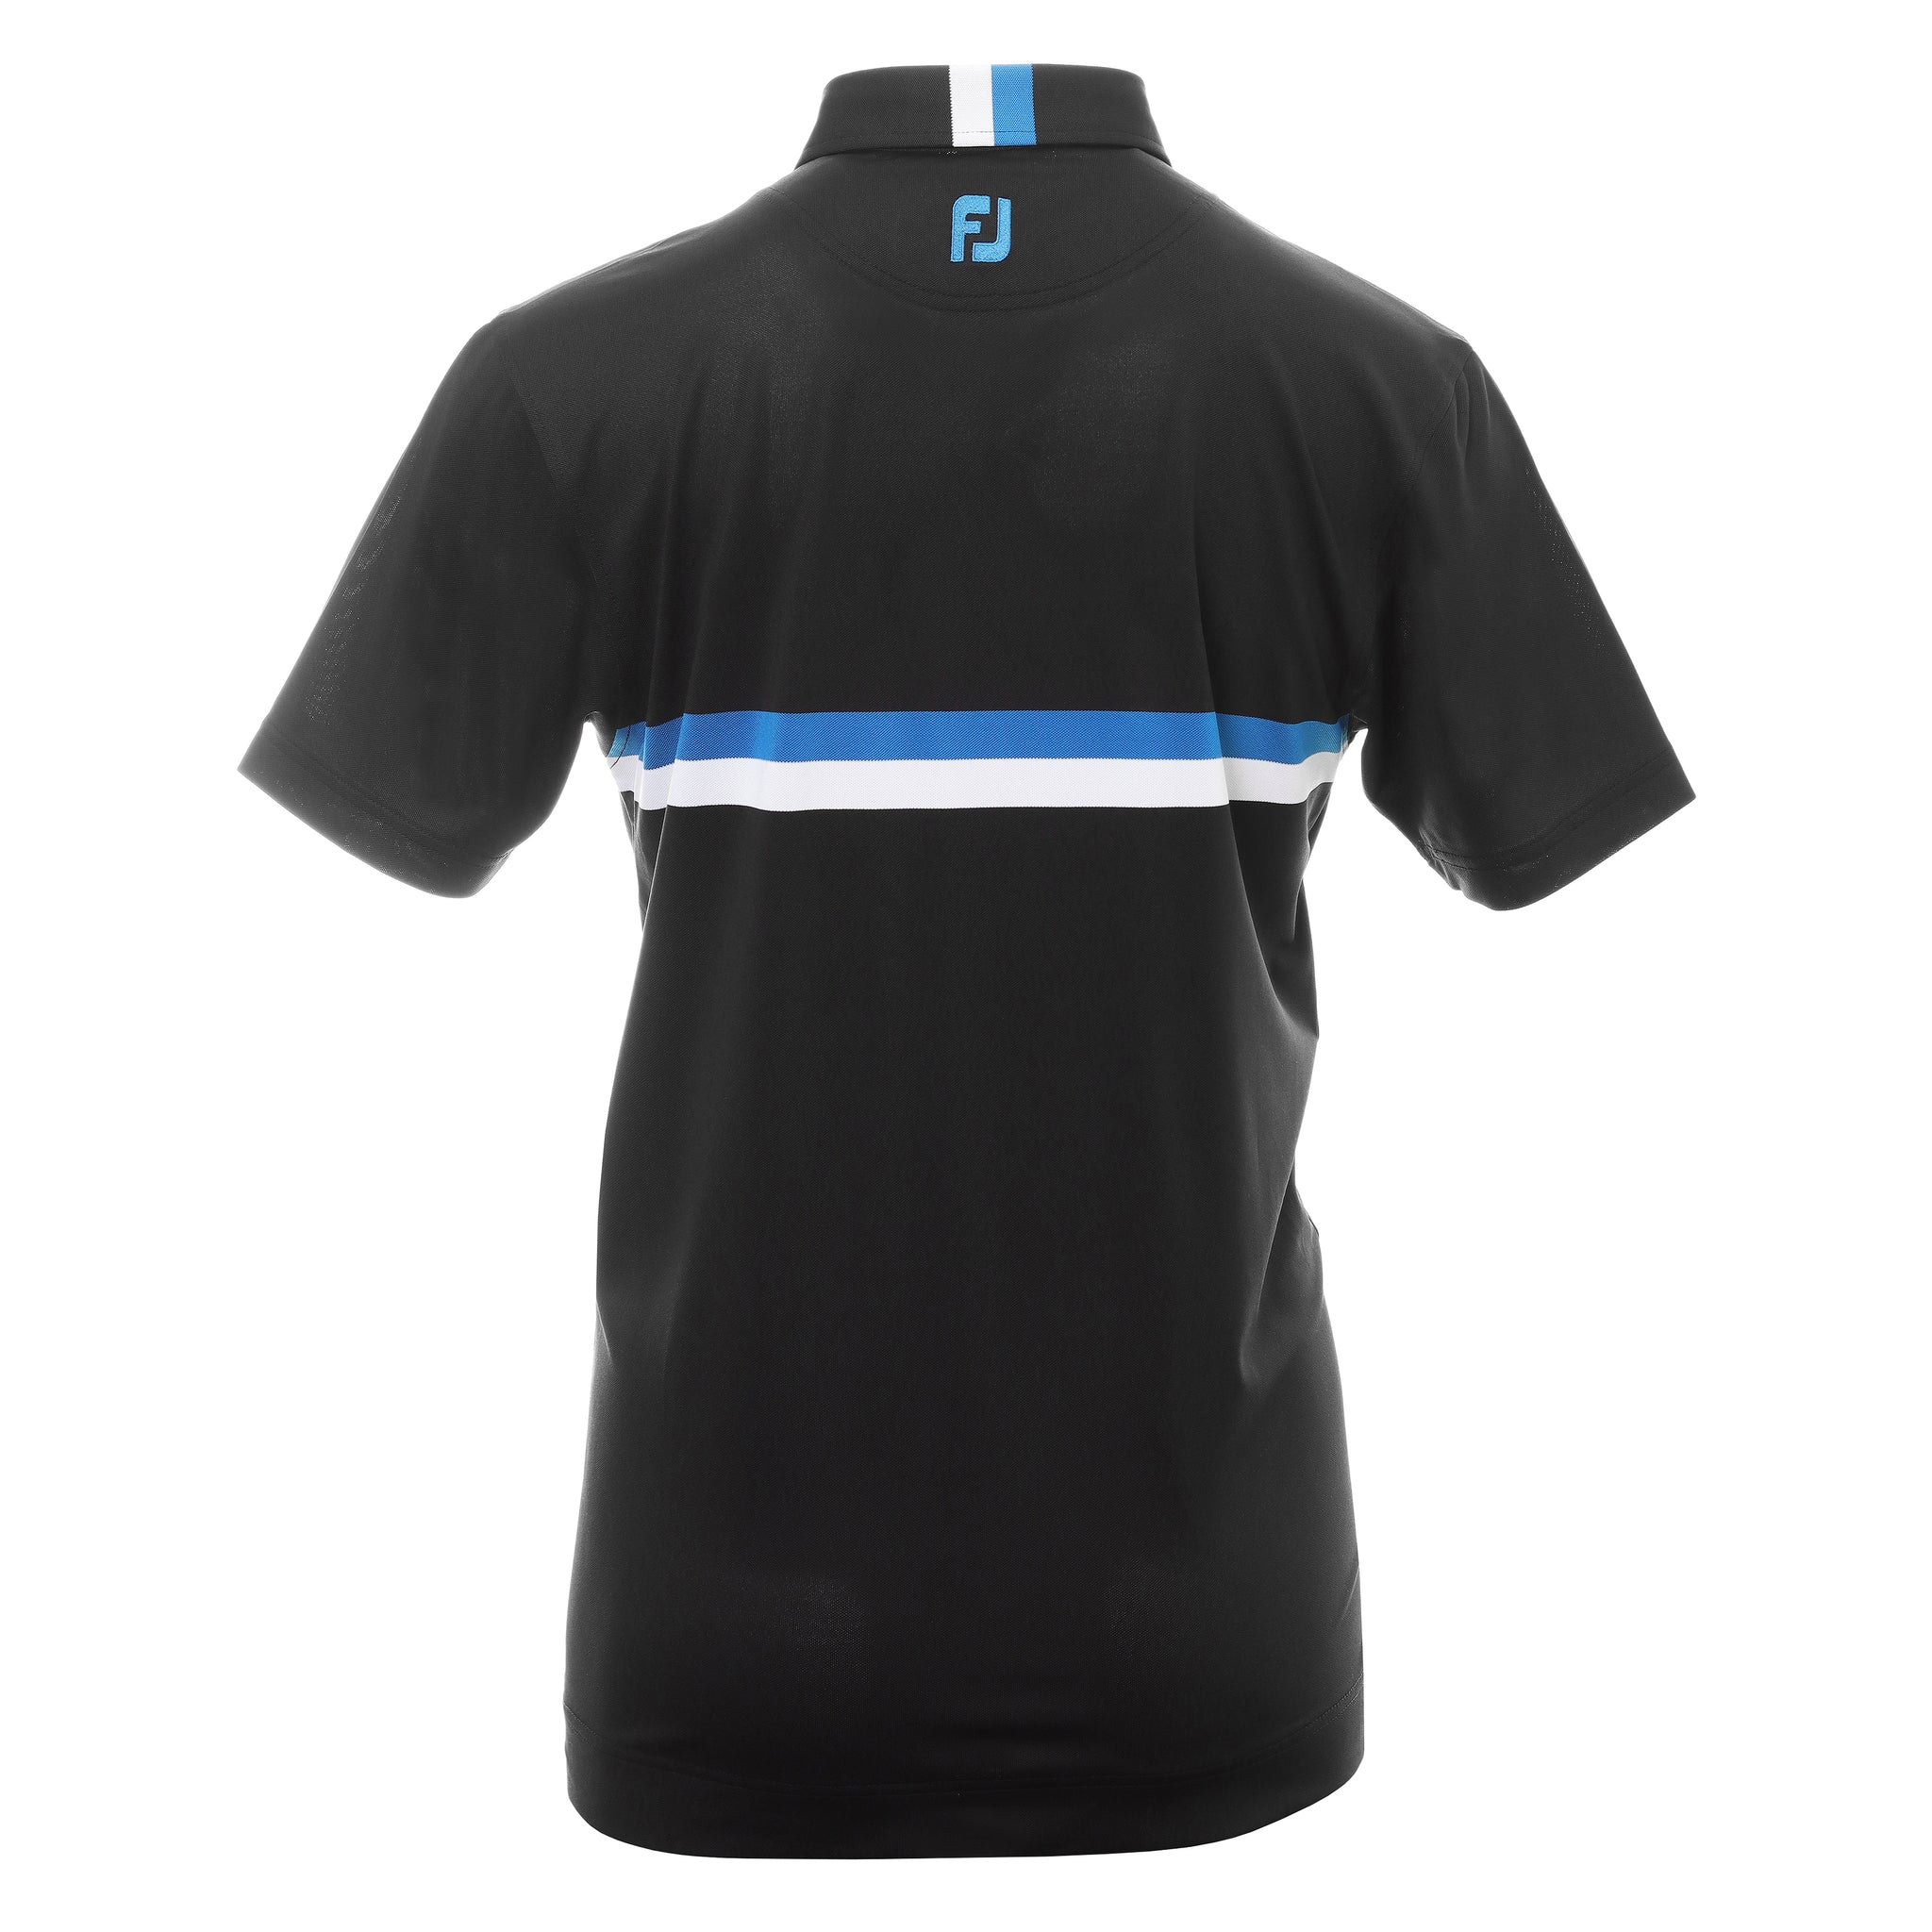 FootJoy Double Chest Band Pique Golf Shirt